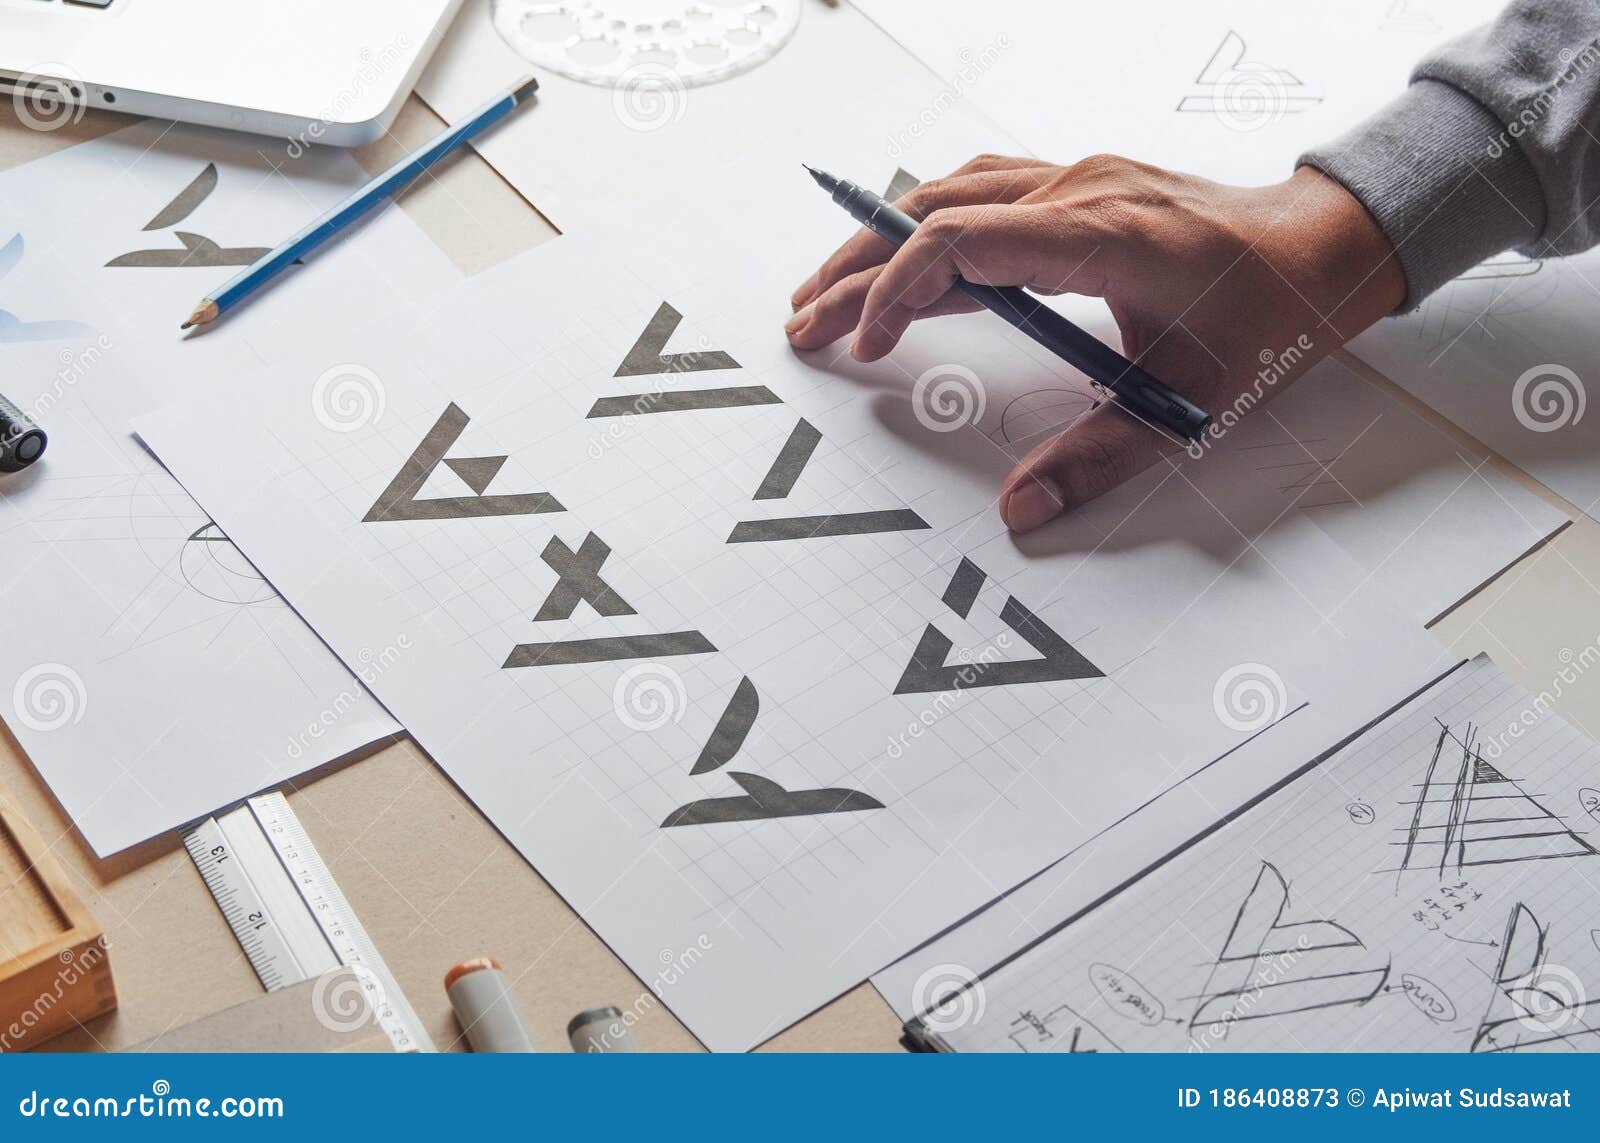 Graphic Designer Development Process Drawing Sketch Design Creative Ideas  Draft Logo Product Trademark Label Brand Artwork Stock Image  Image of  marketing process 186408867